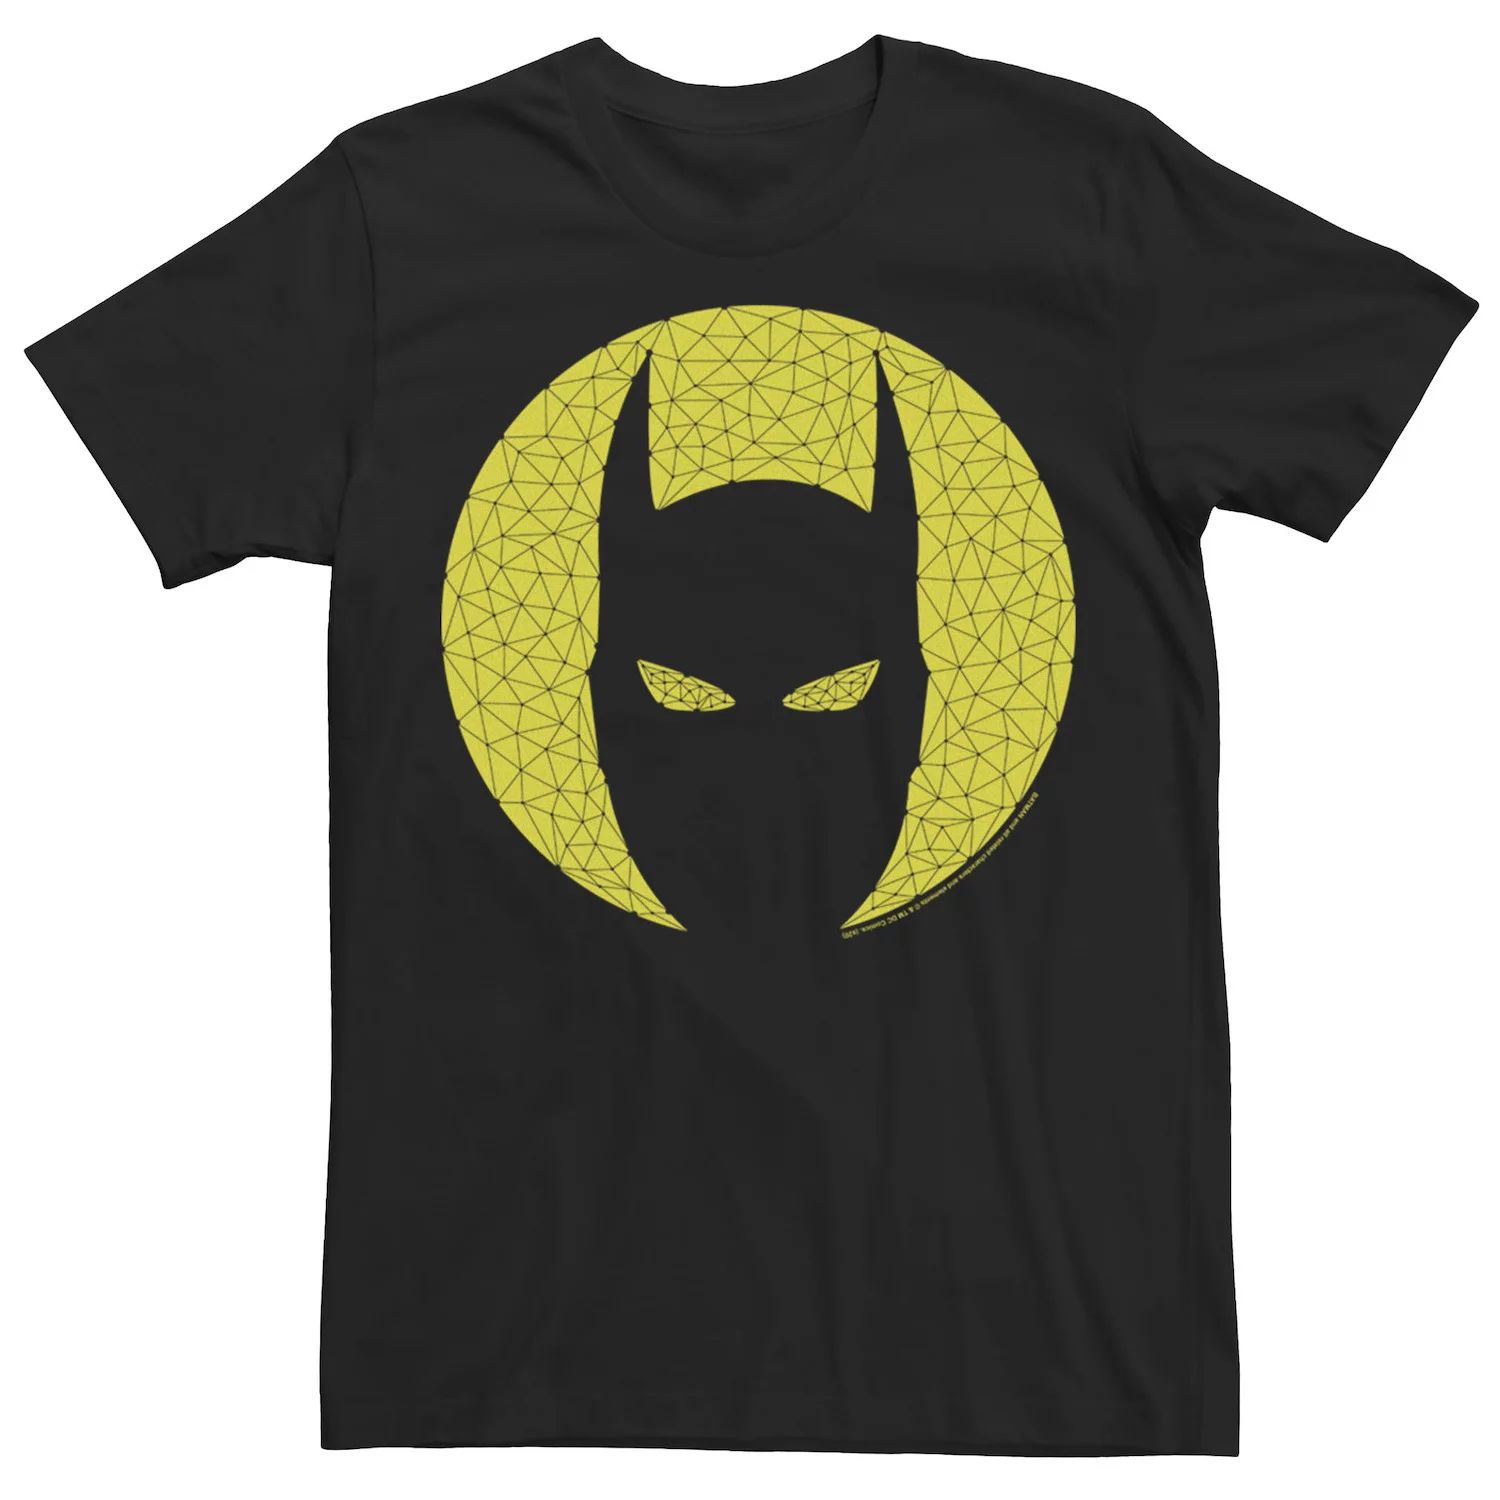 Мужская футболка DC Fandome с маской Бэтмена и геометрическим силуэтом лунного света Licensed Character